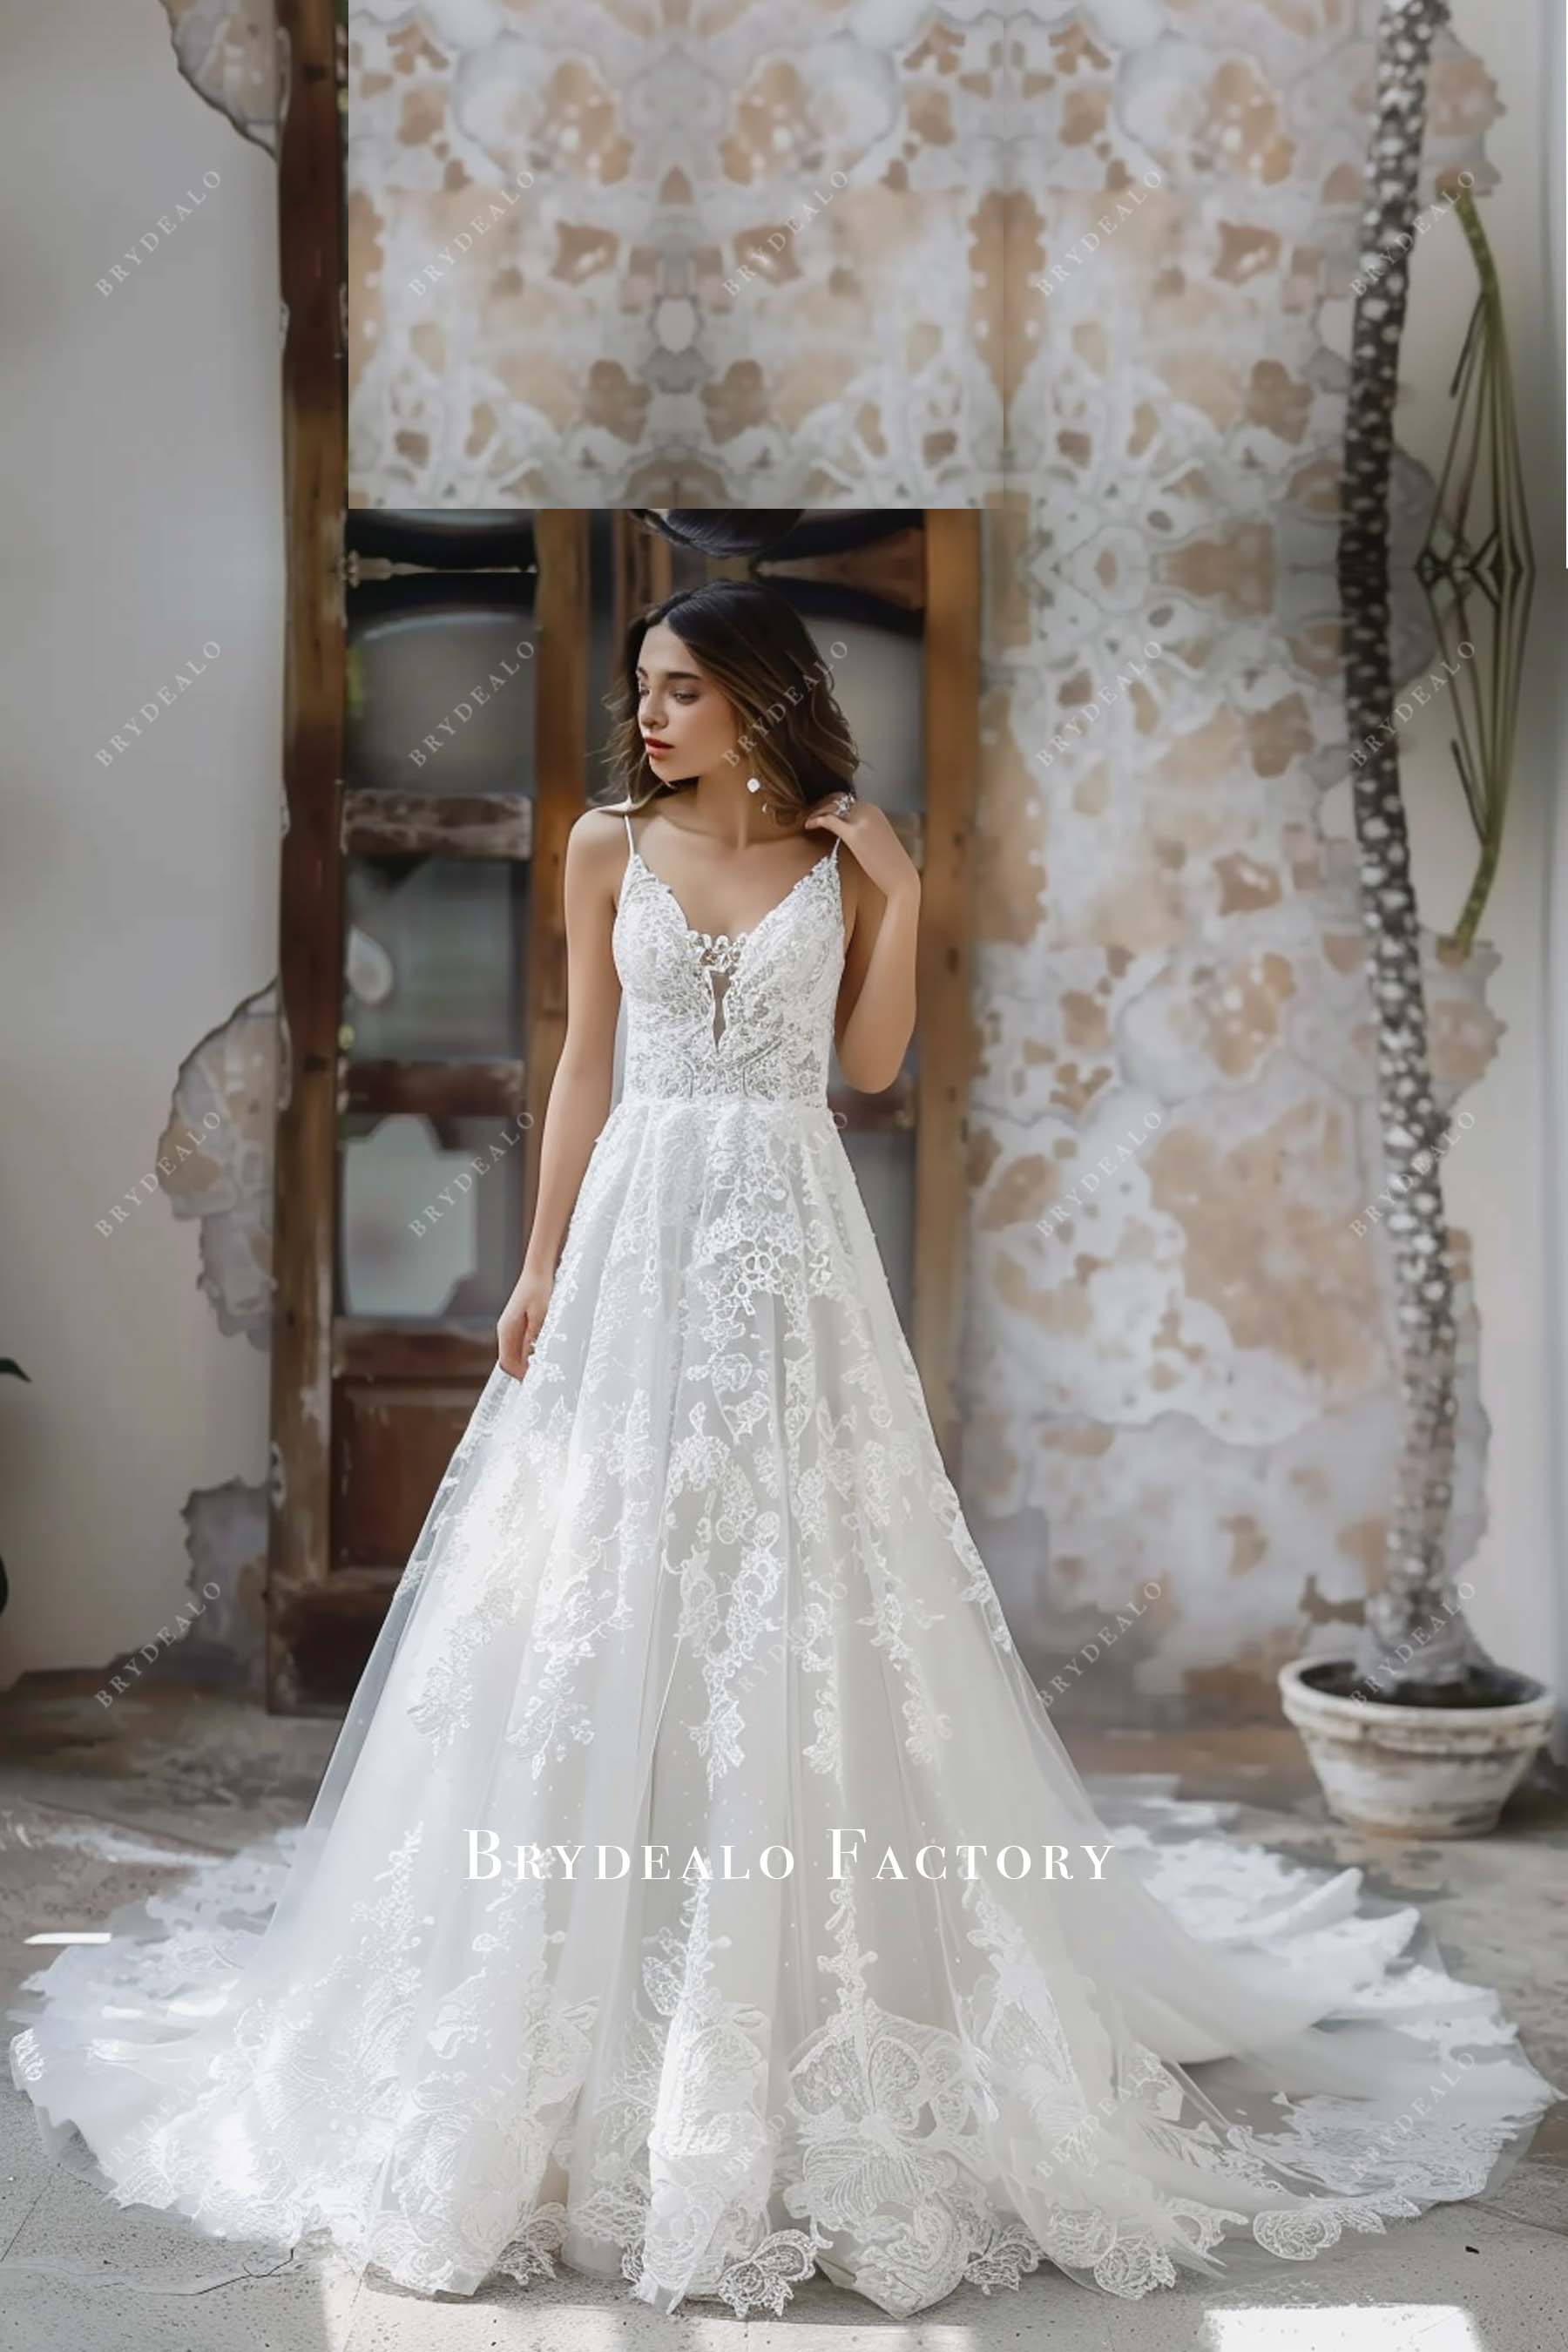 Lace Sleeveless Destination Wedding Dress